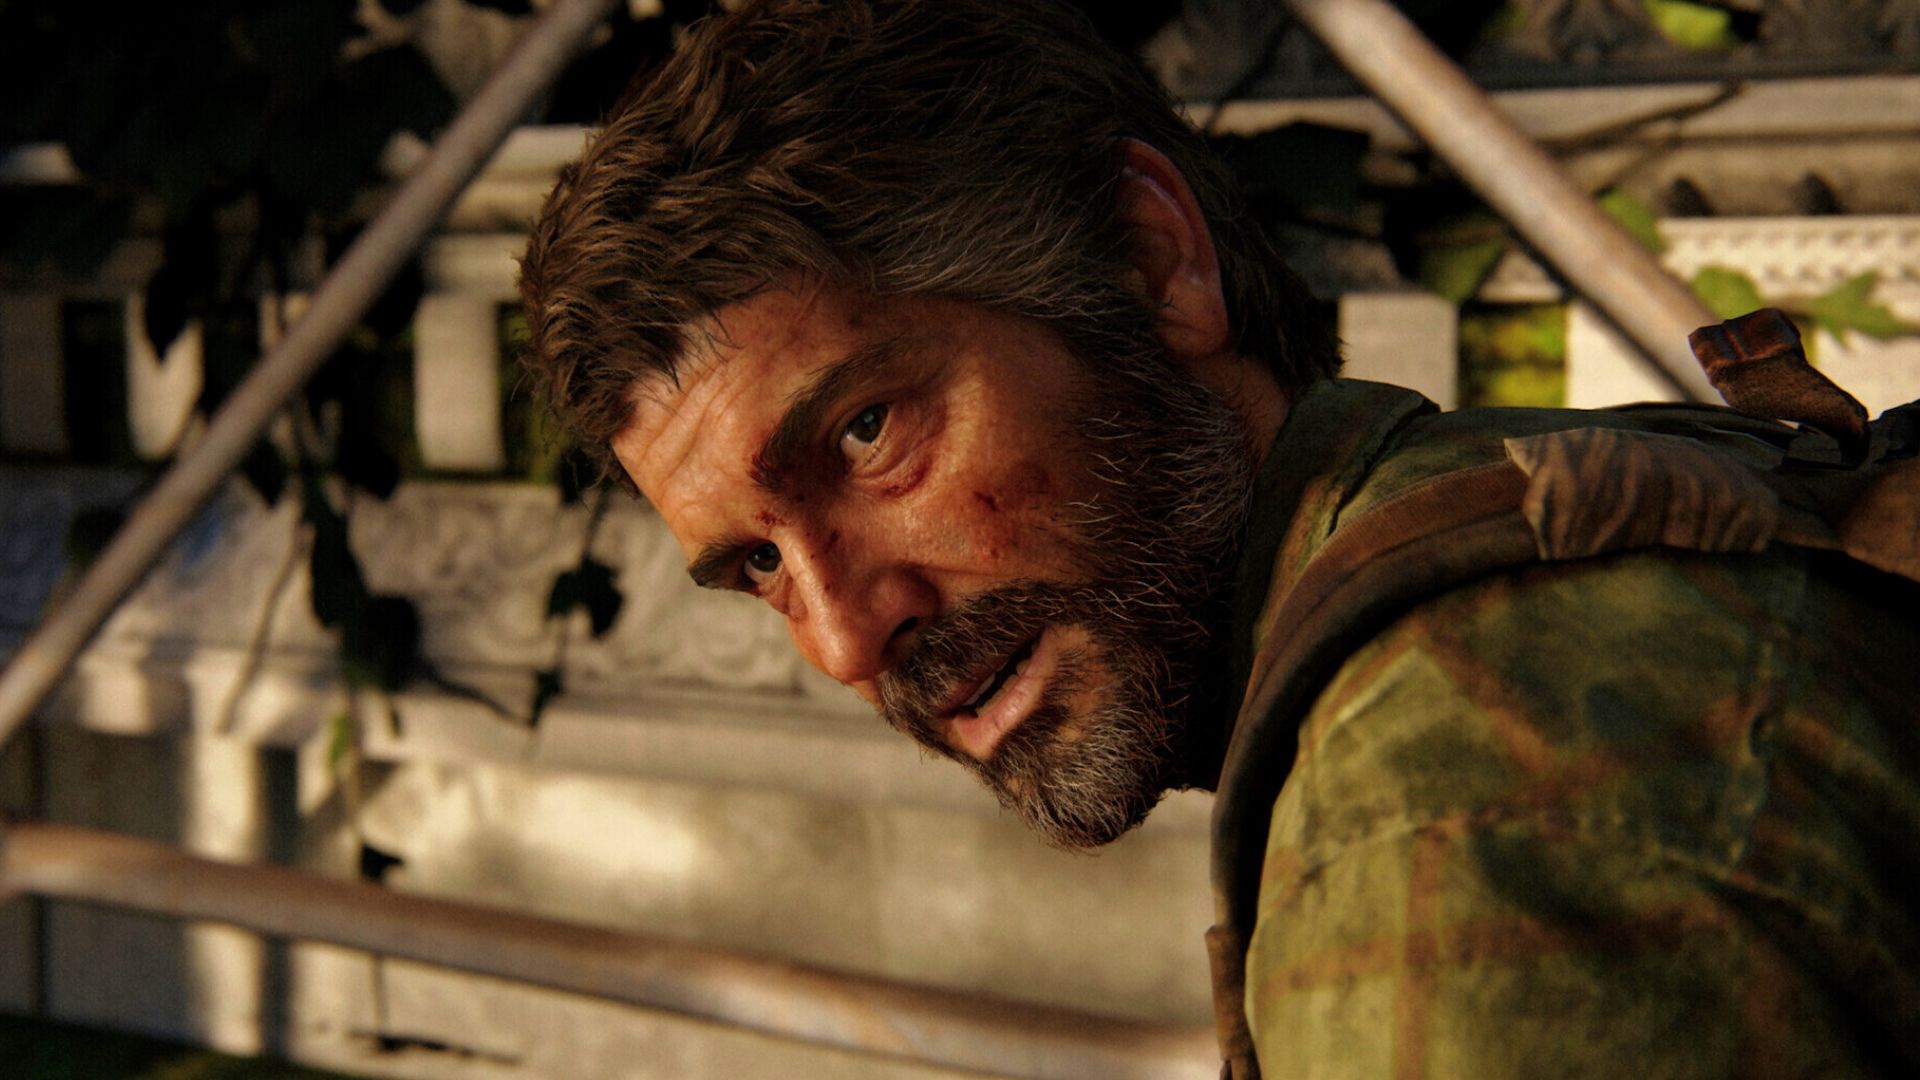 Elden Ring's storytelling inspires The Last of Us director's ideas